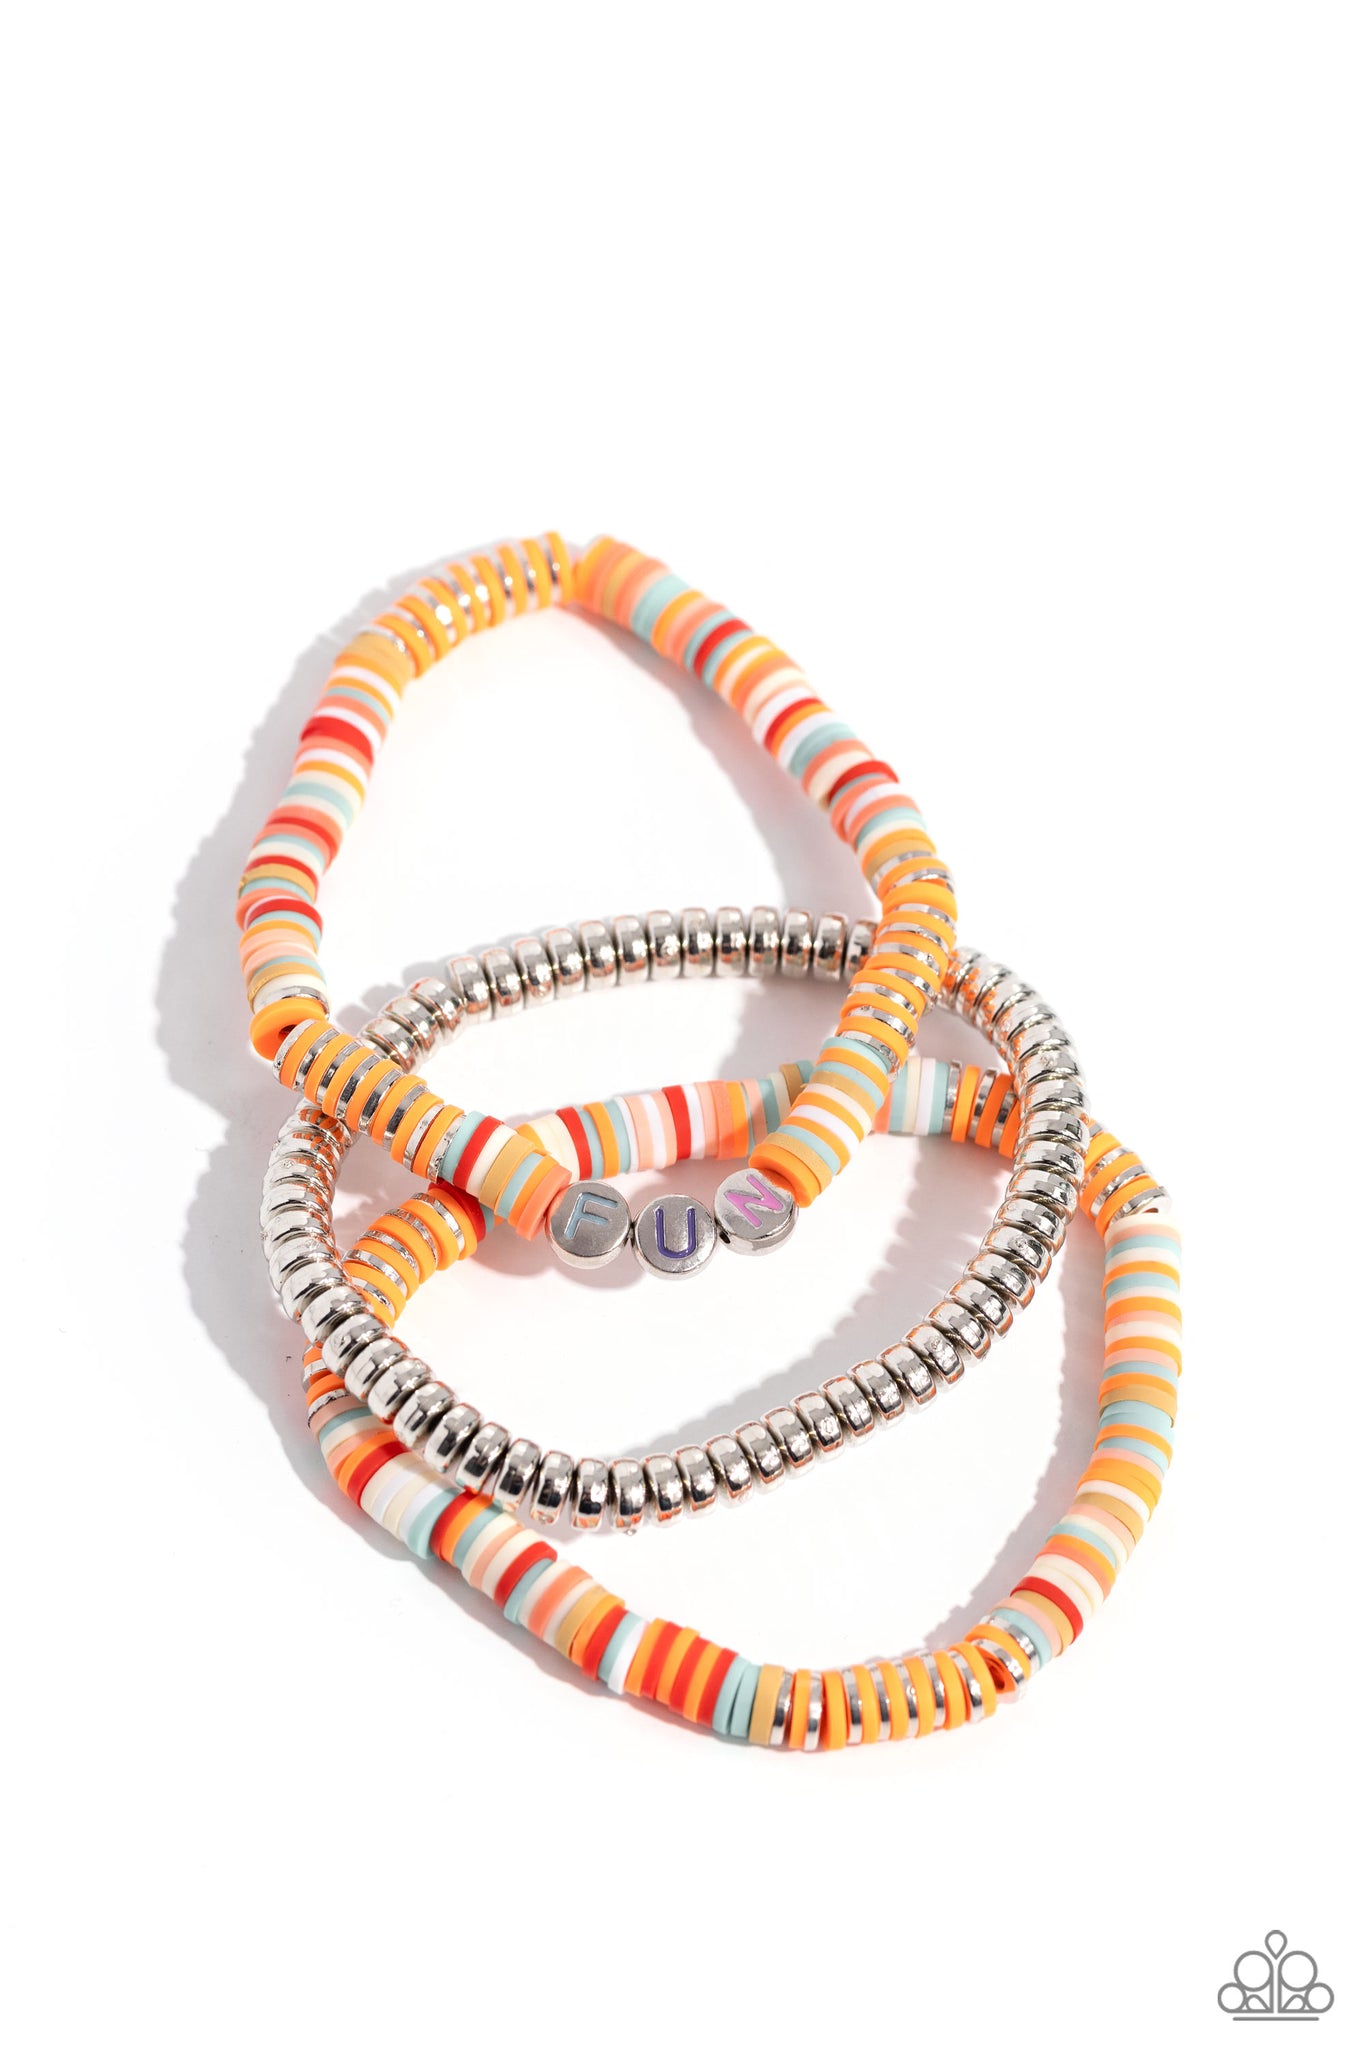 Just for Fun Bracelet (Orange, White)